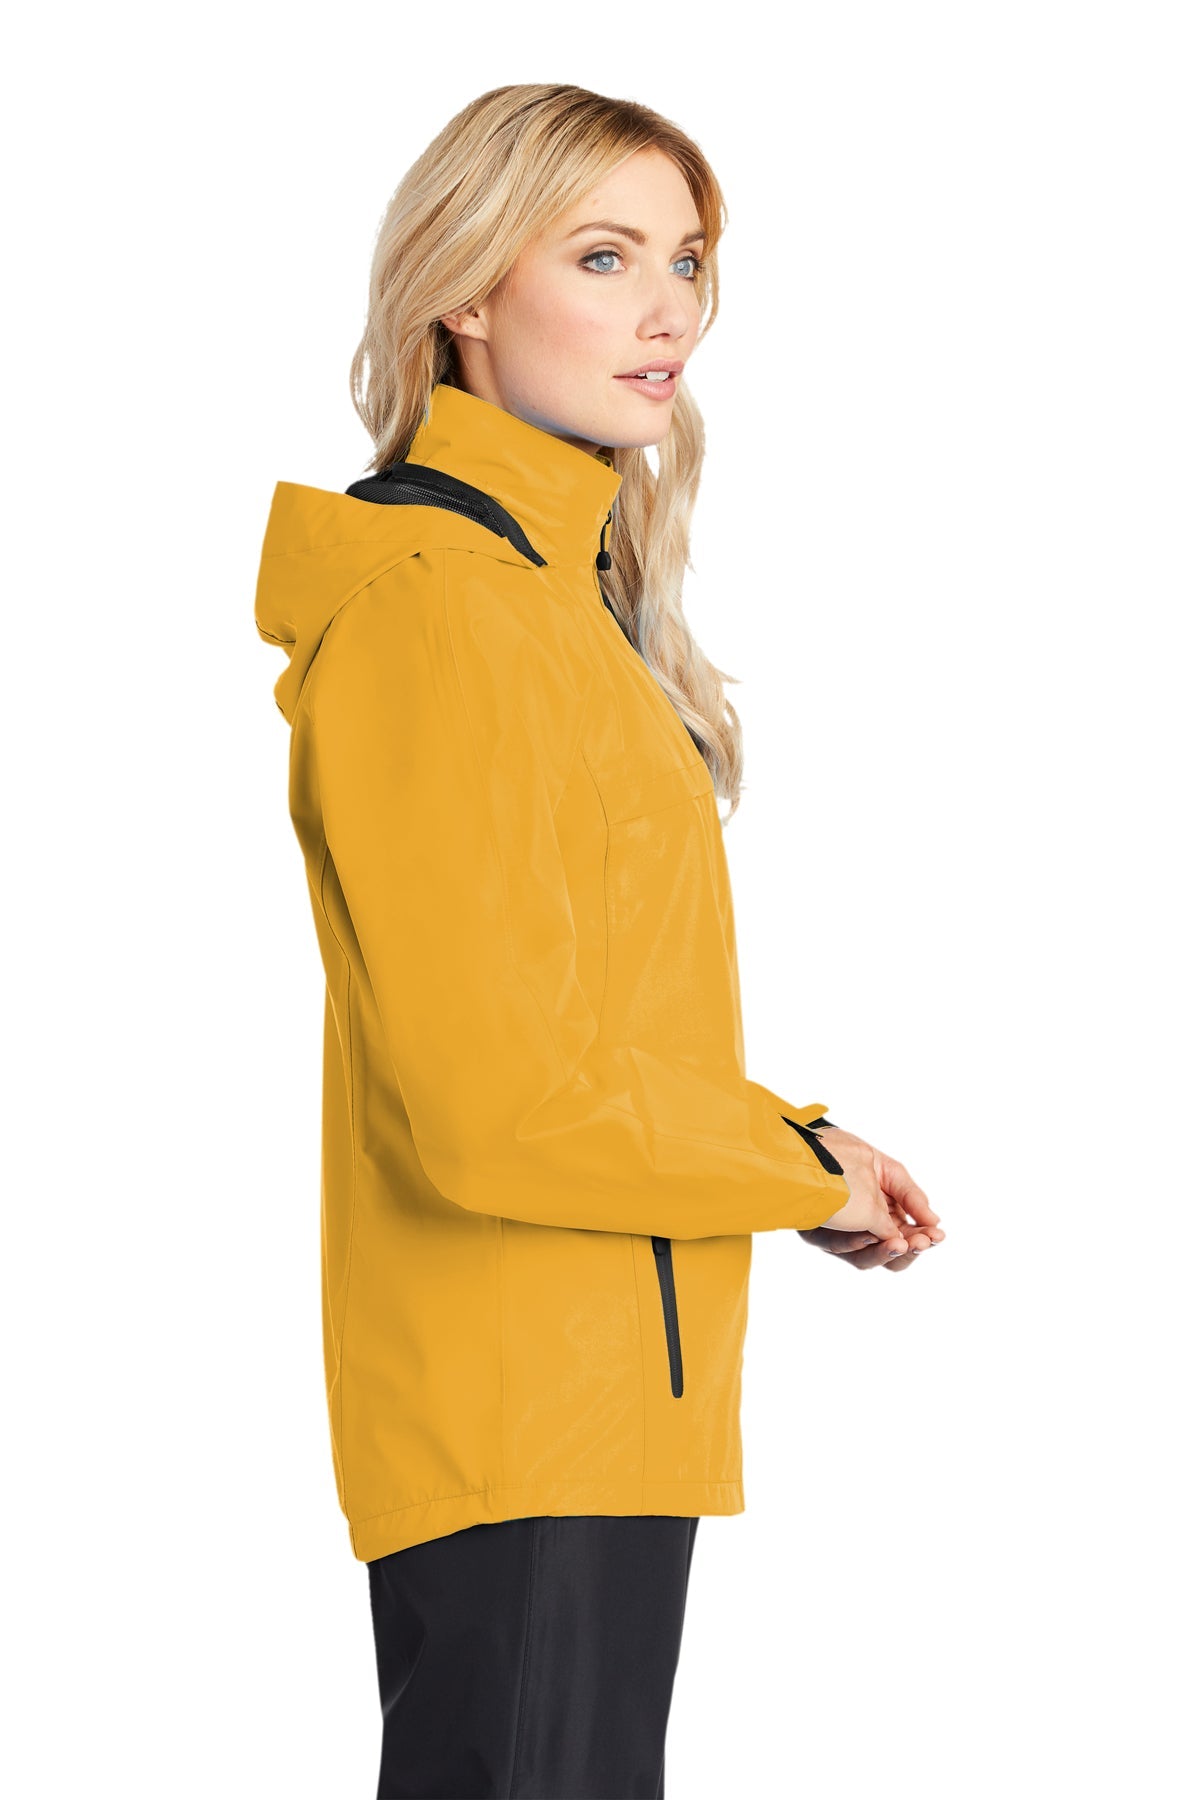 Port Authority Ladies Torrent Customized Waterproof Jackets, Slickers, Yellow